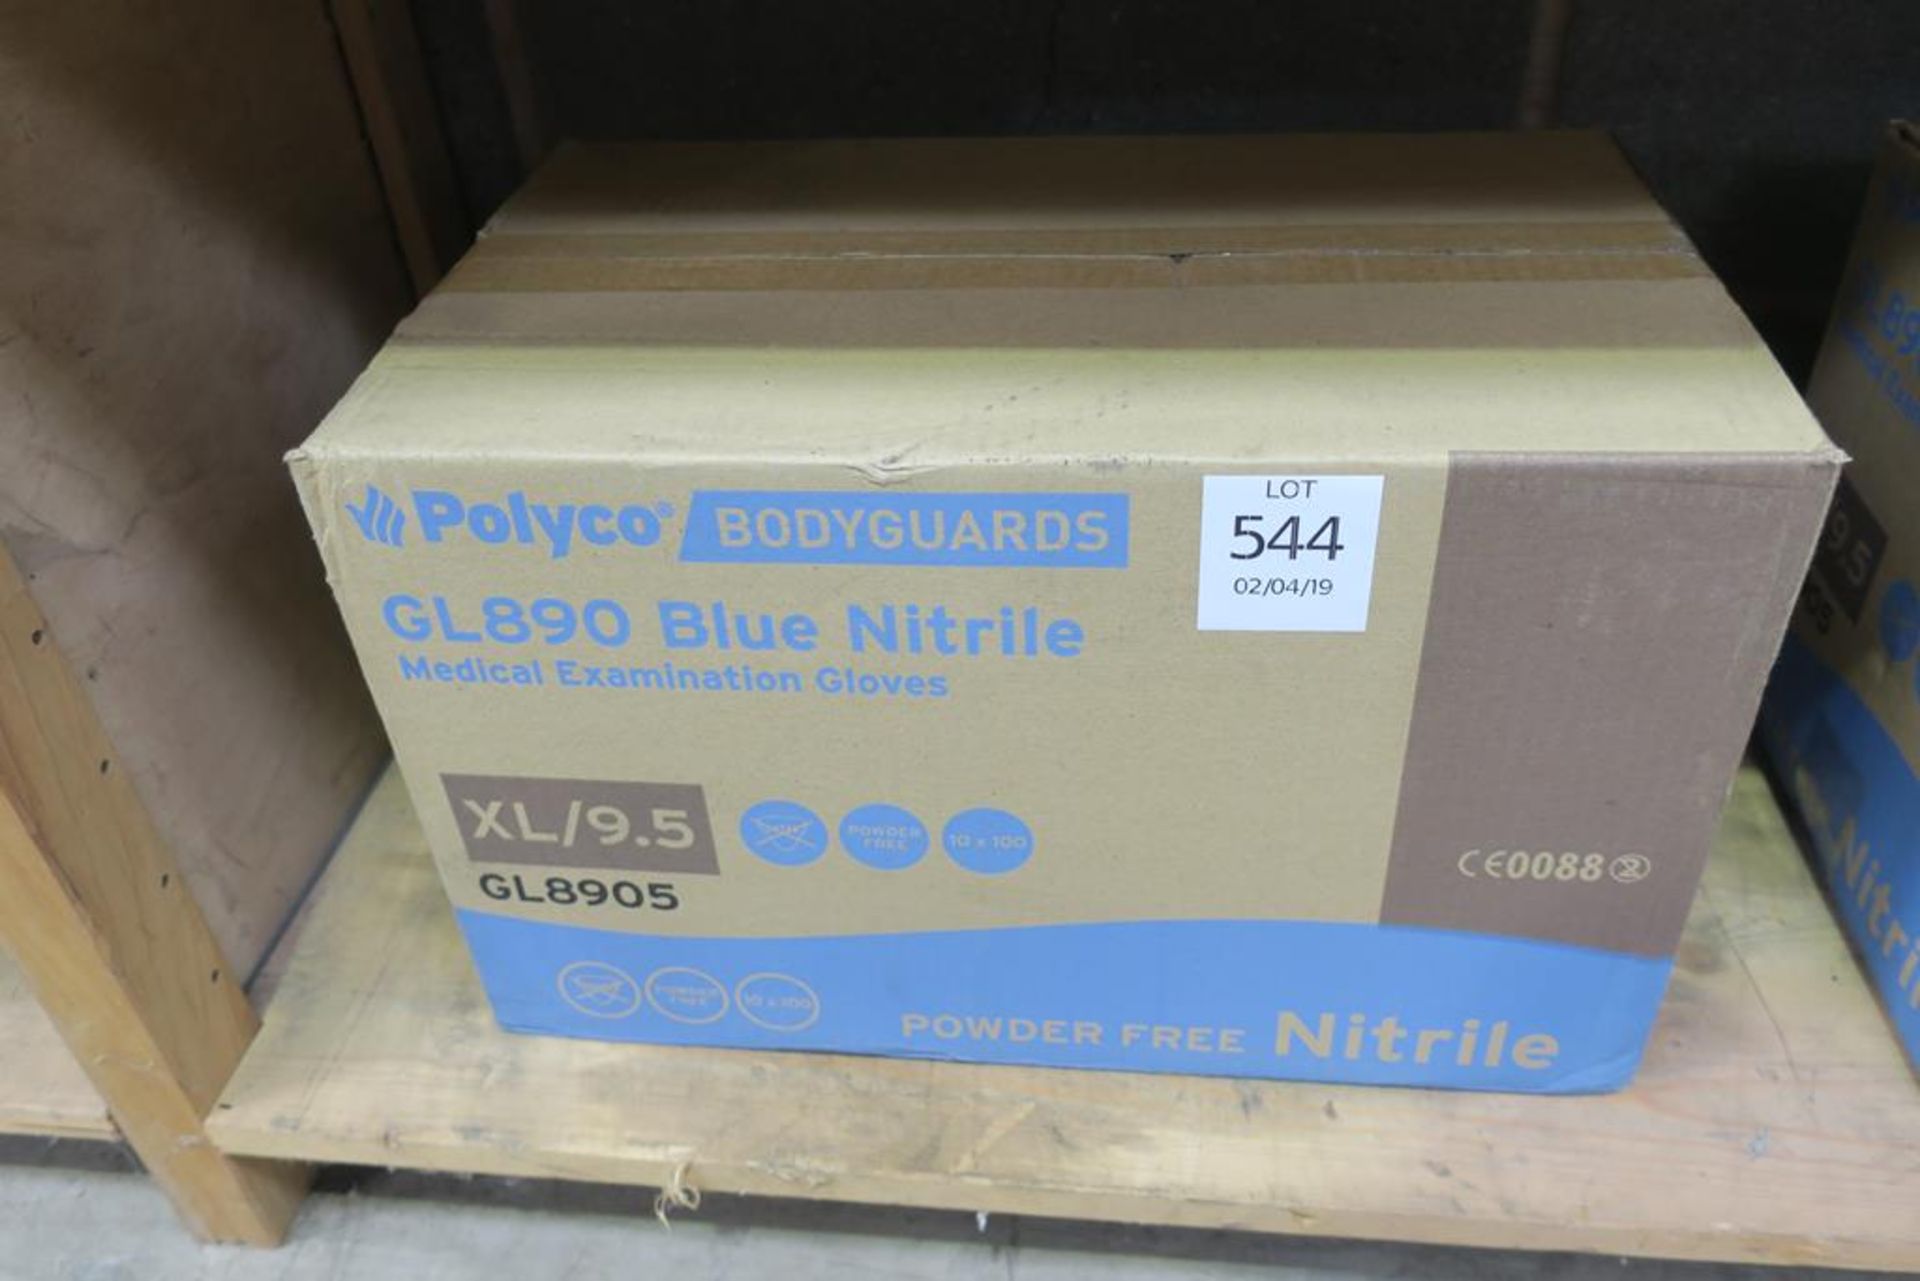 A box of Polyco GL890 Blue Nitrile Medical Examination Gloves Powder Free